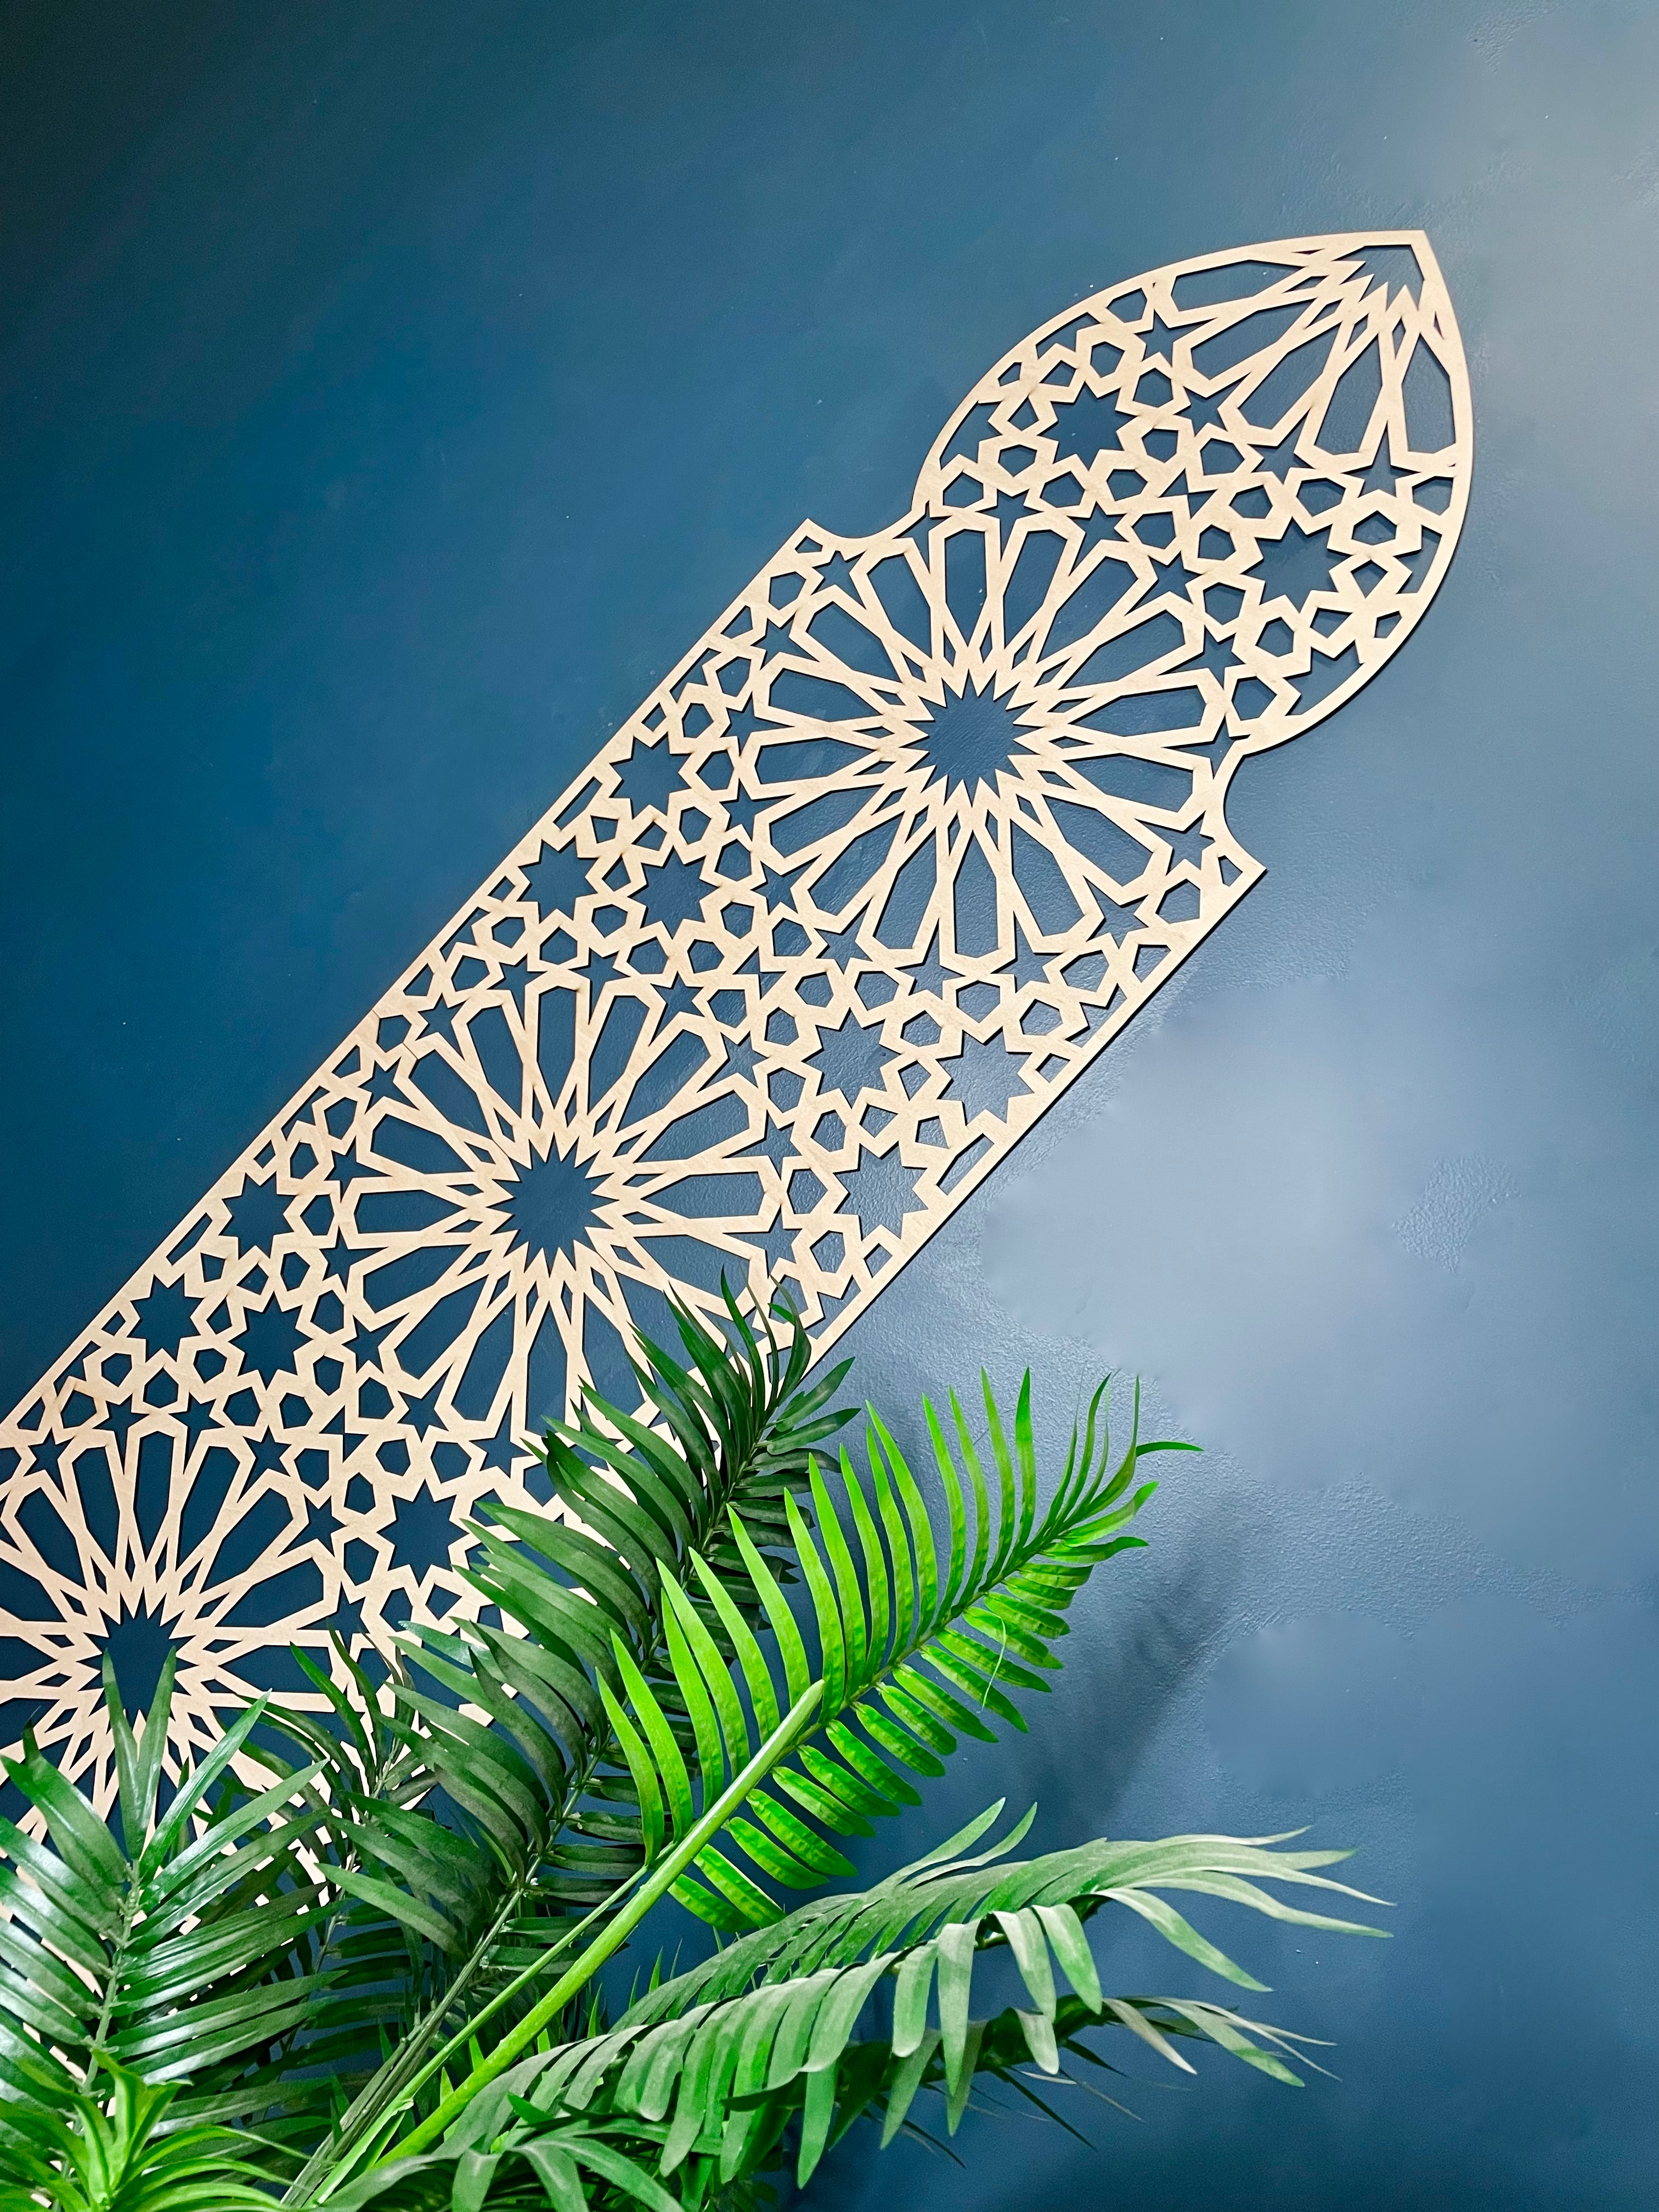 Moroccan Decorative Wall Panel Geometric 